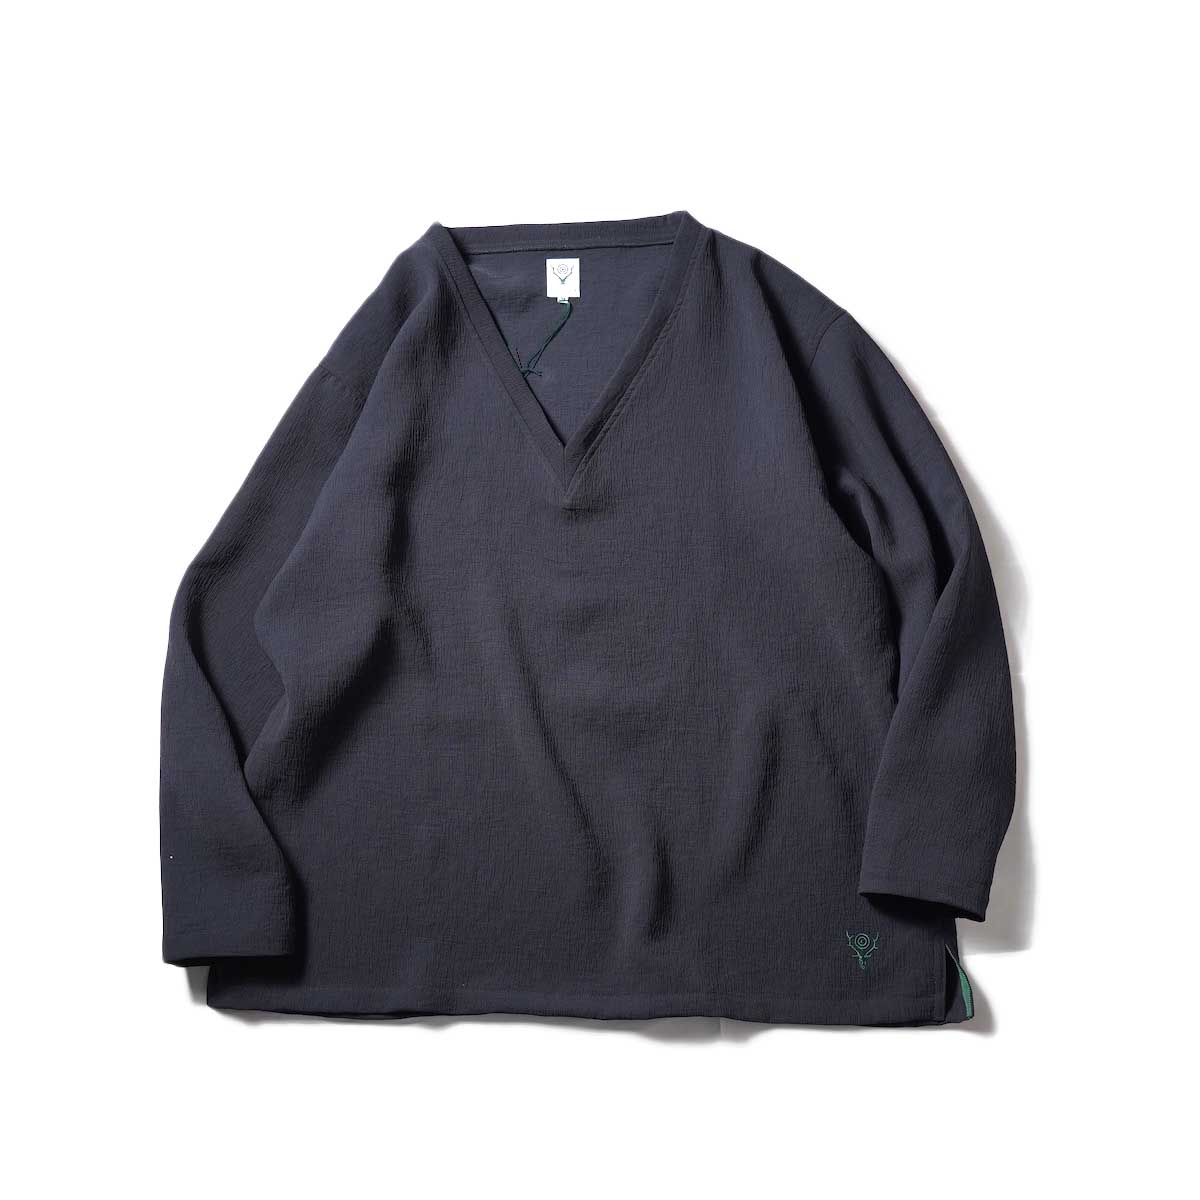 South2 West8 / S.S.V Neck Shirt - Poly Crepe Double Cloth (Black)